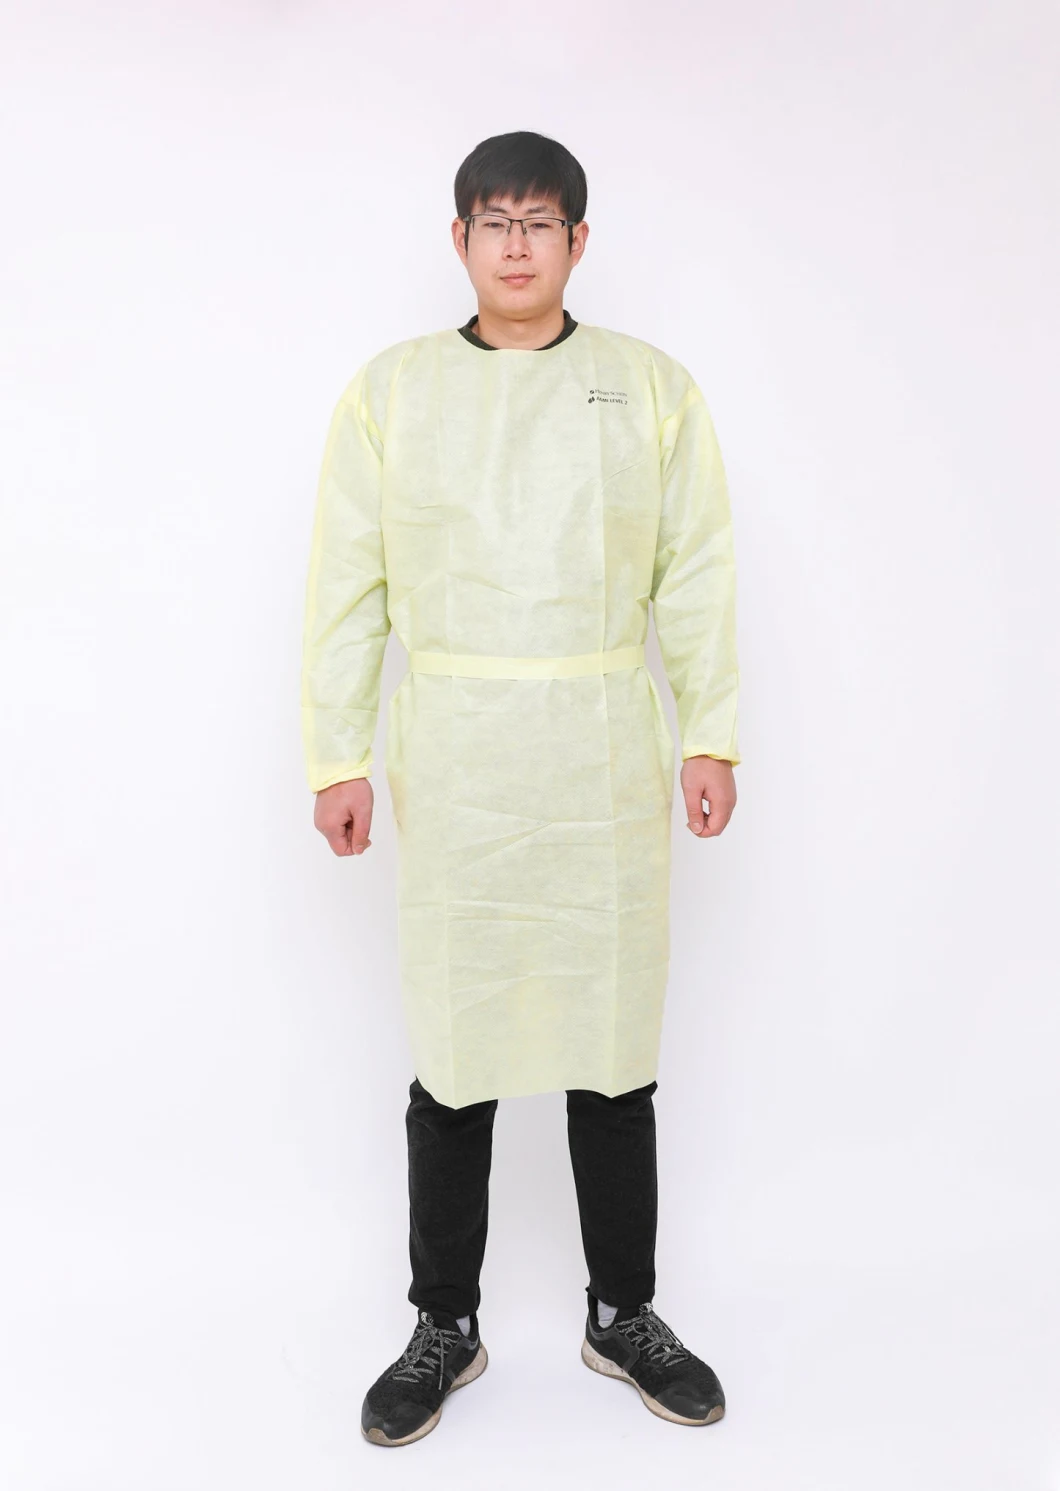 Inquiry About Good Quanlity Lab Hazmat Suit Level 1 Disposable Sterile Gown for Us Market